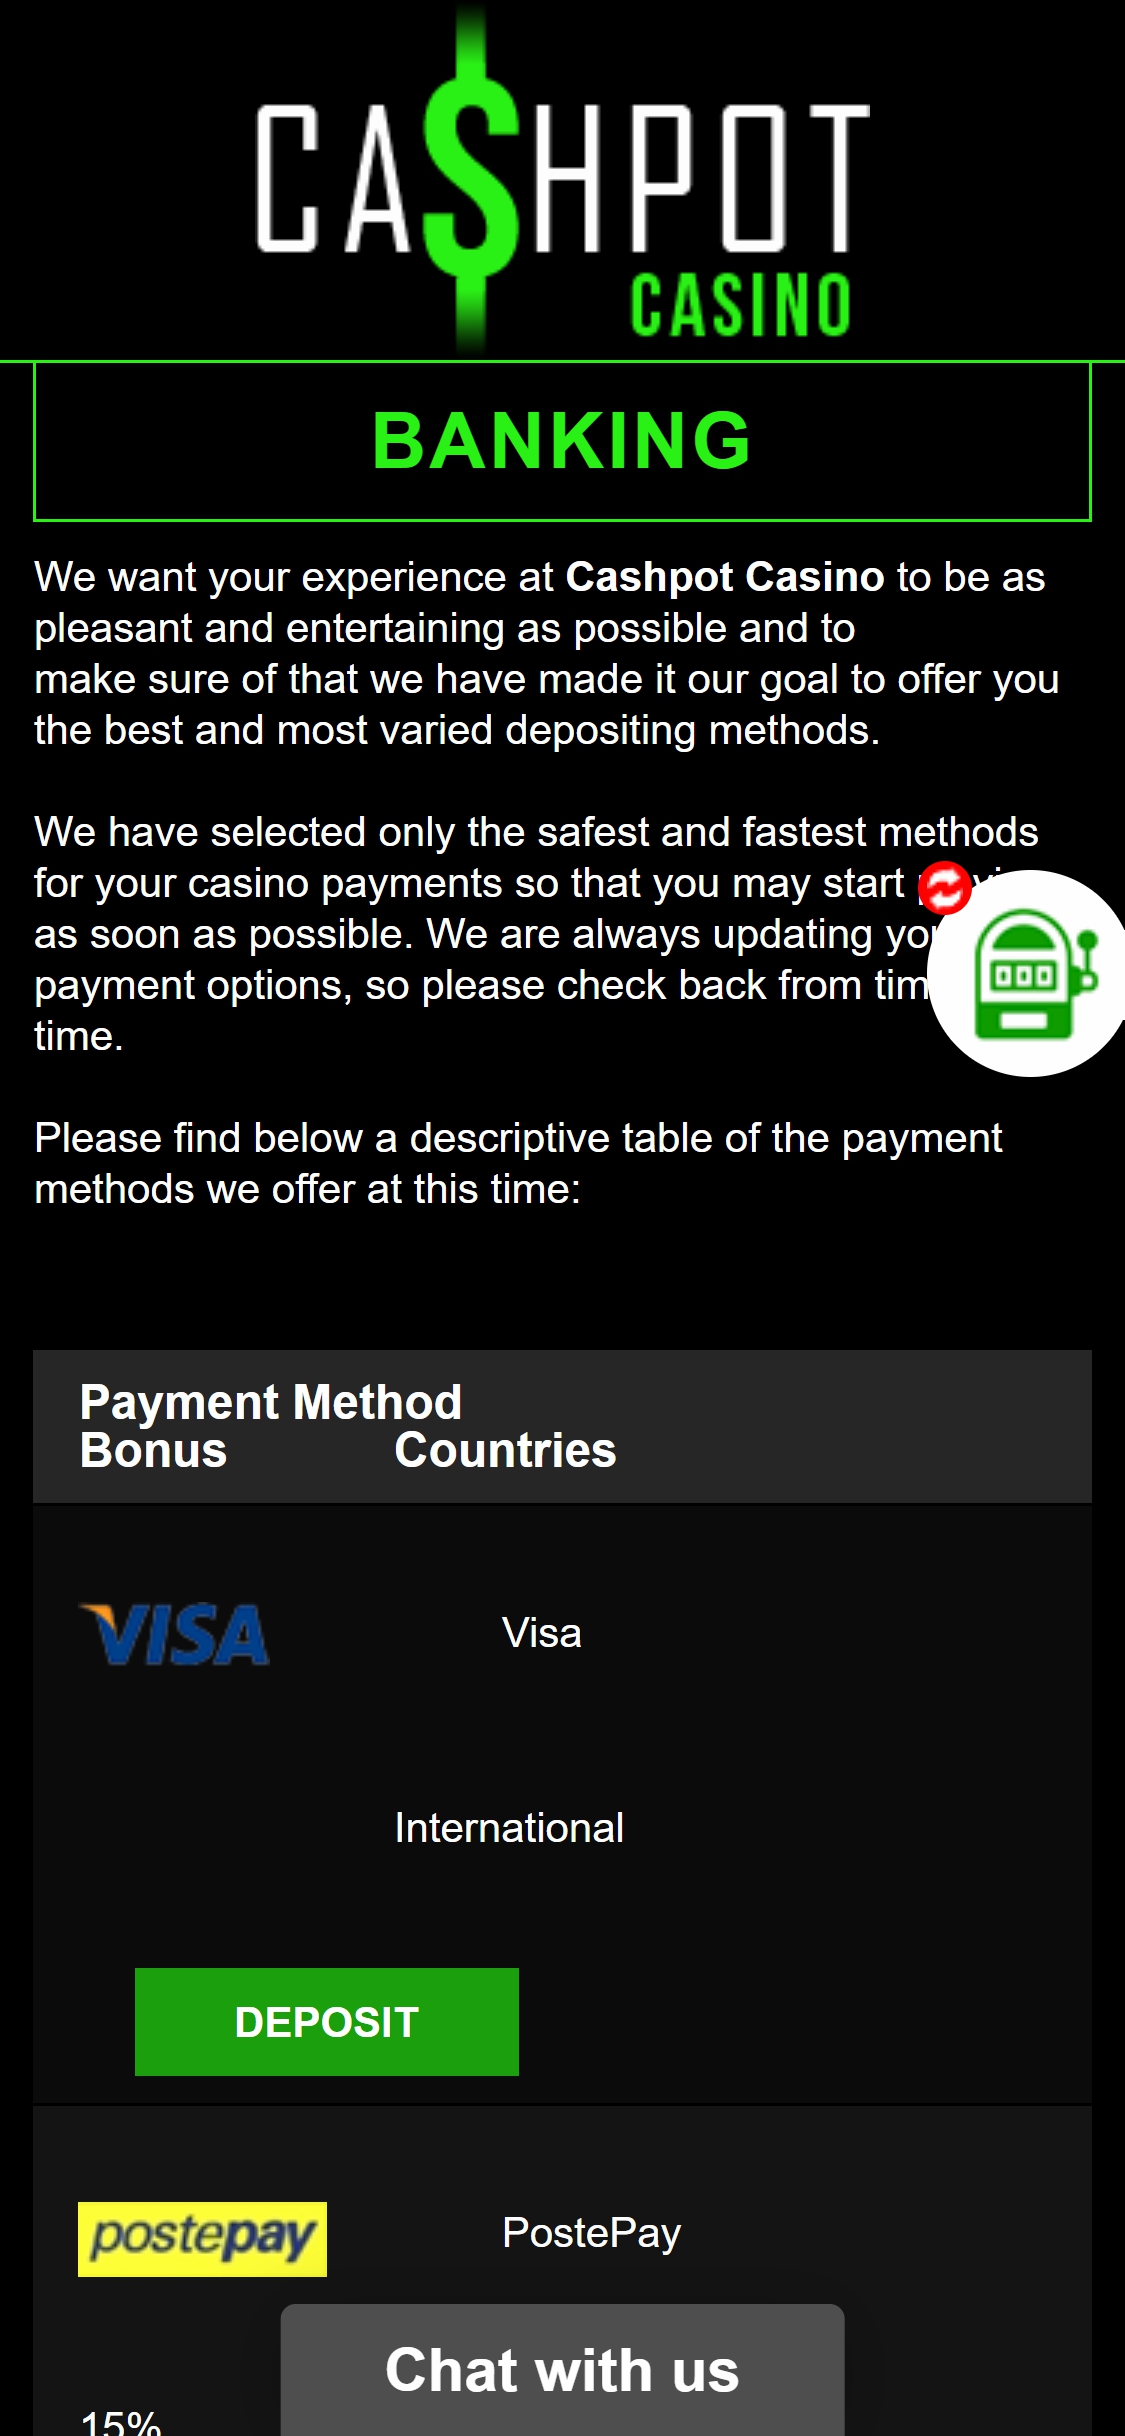 Cash Pot Casino Mobile Payment Methods Review